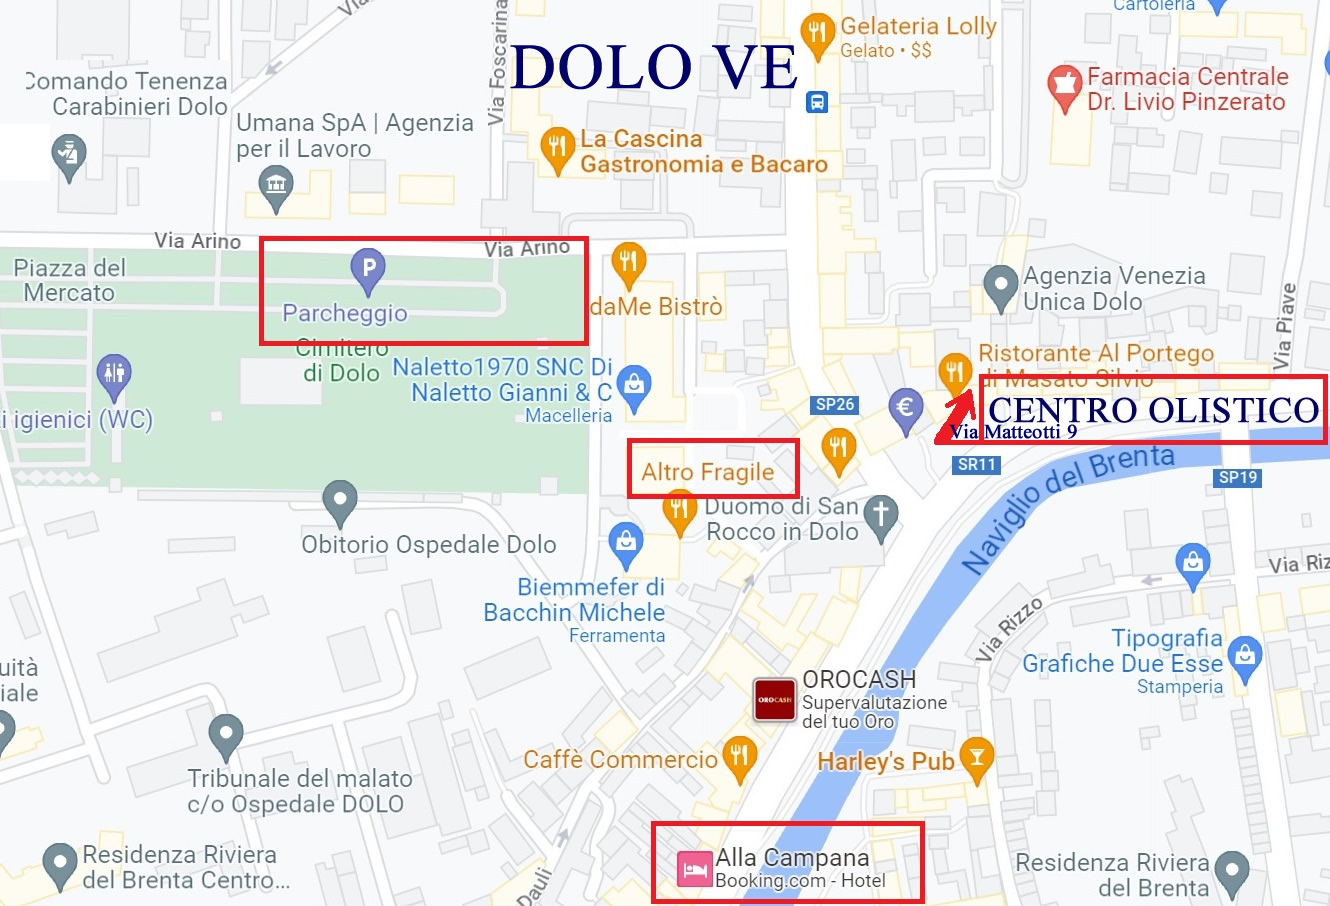 Mappa-ingrandita-alloggi-dolo-venezia